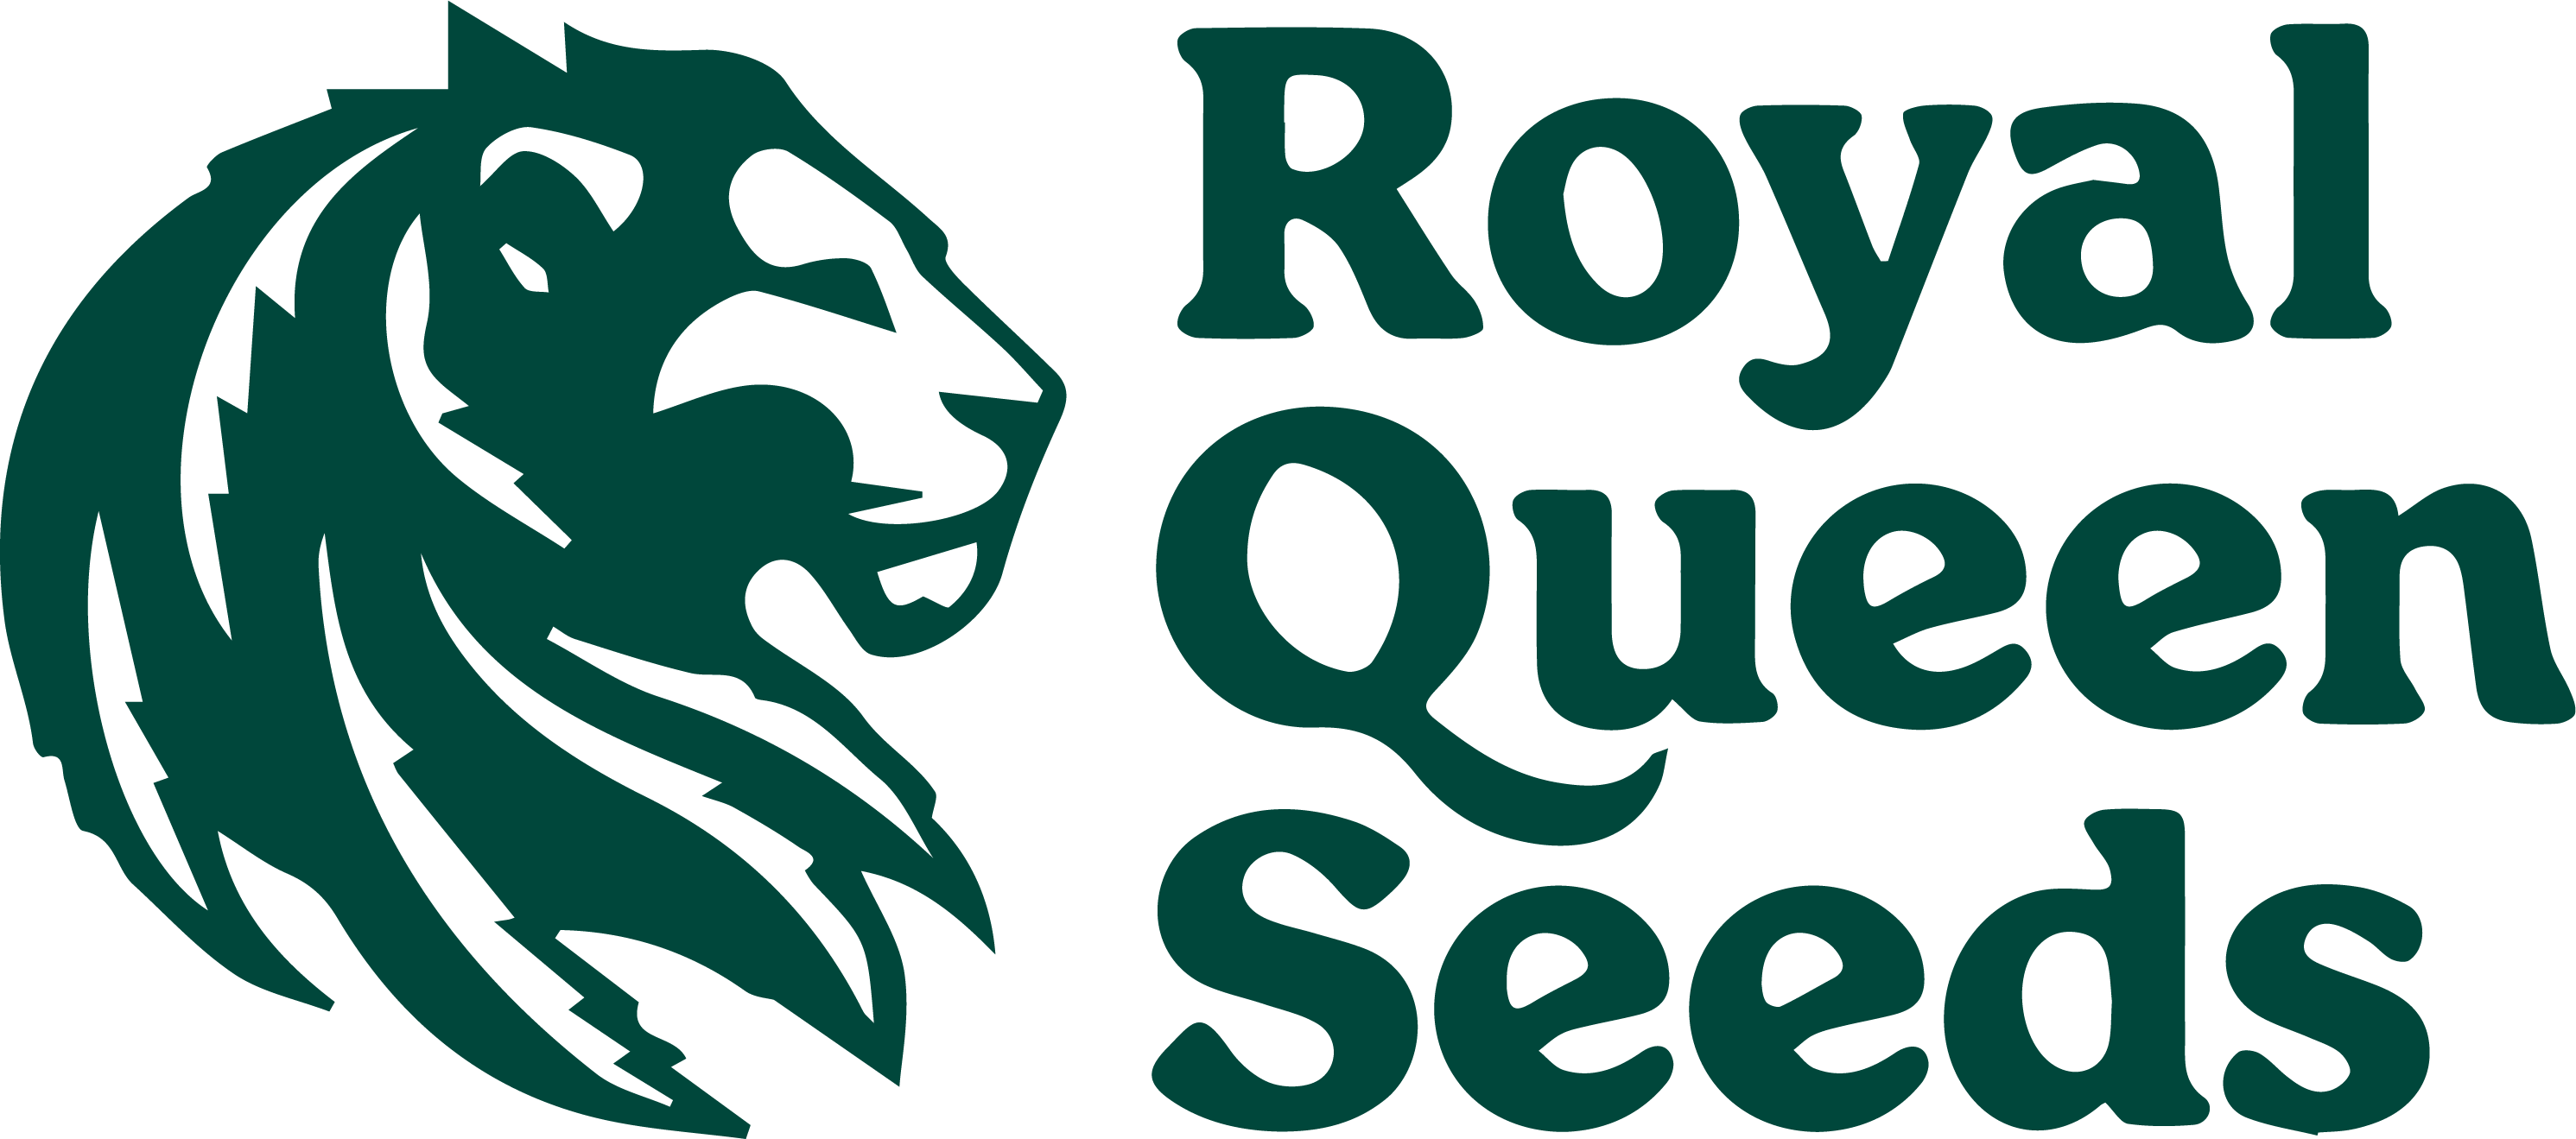 Royal Queen Seeds - F1 - Hybrid Auto - Feminized Cannabis Seeds